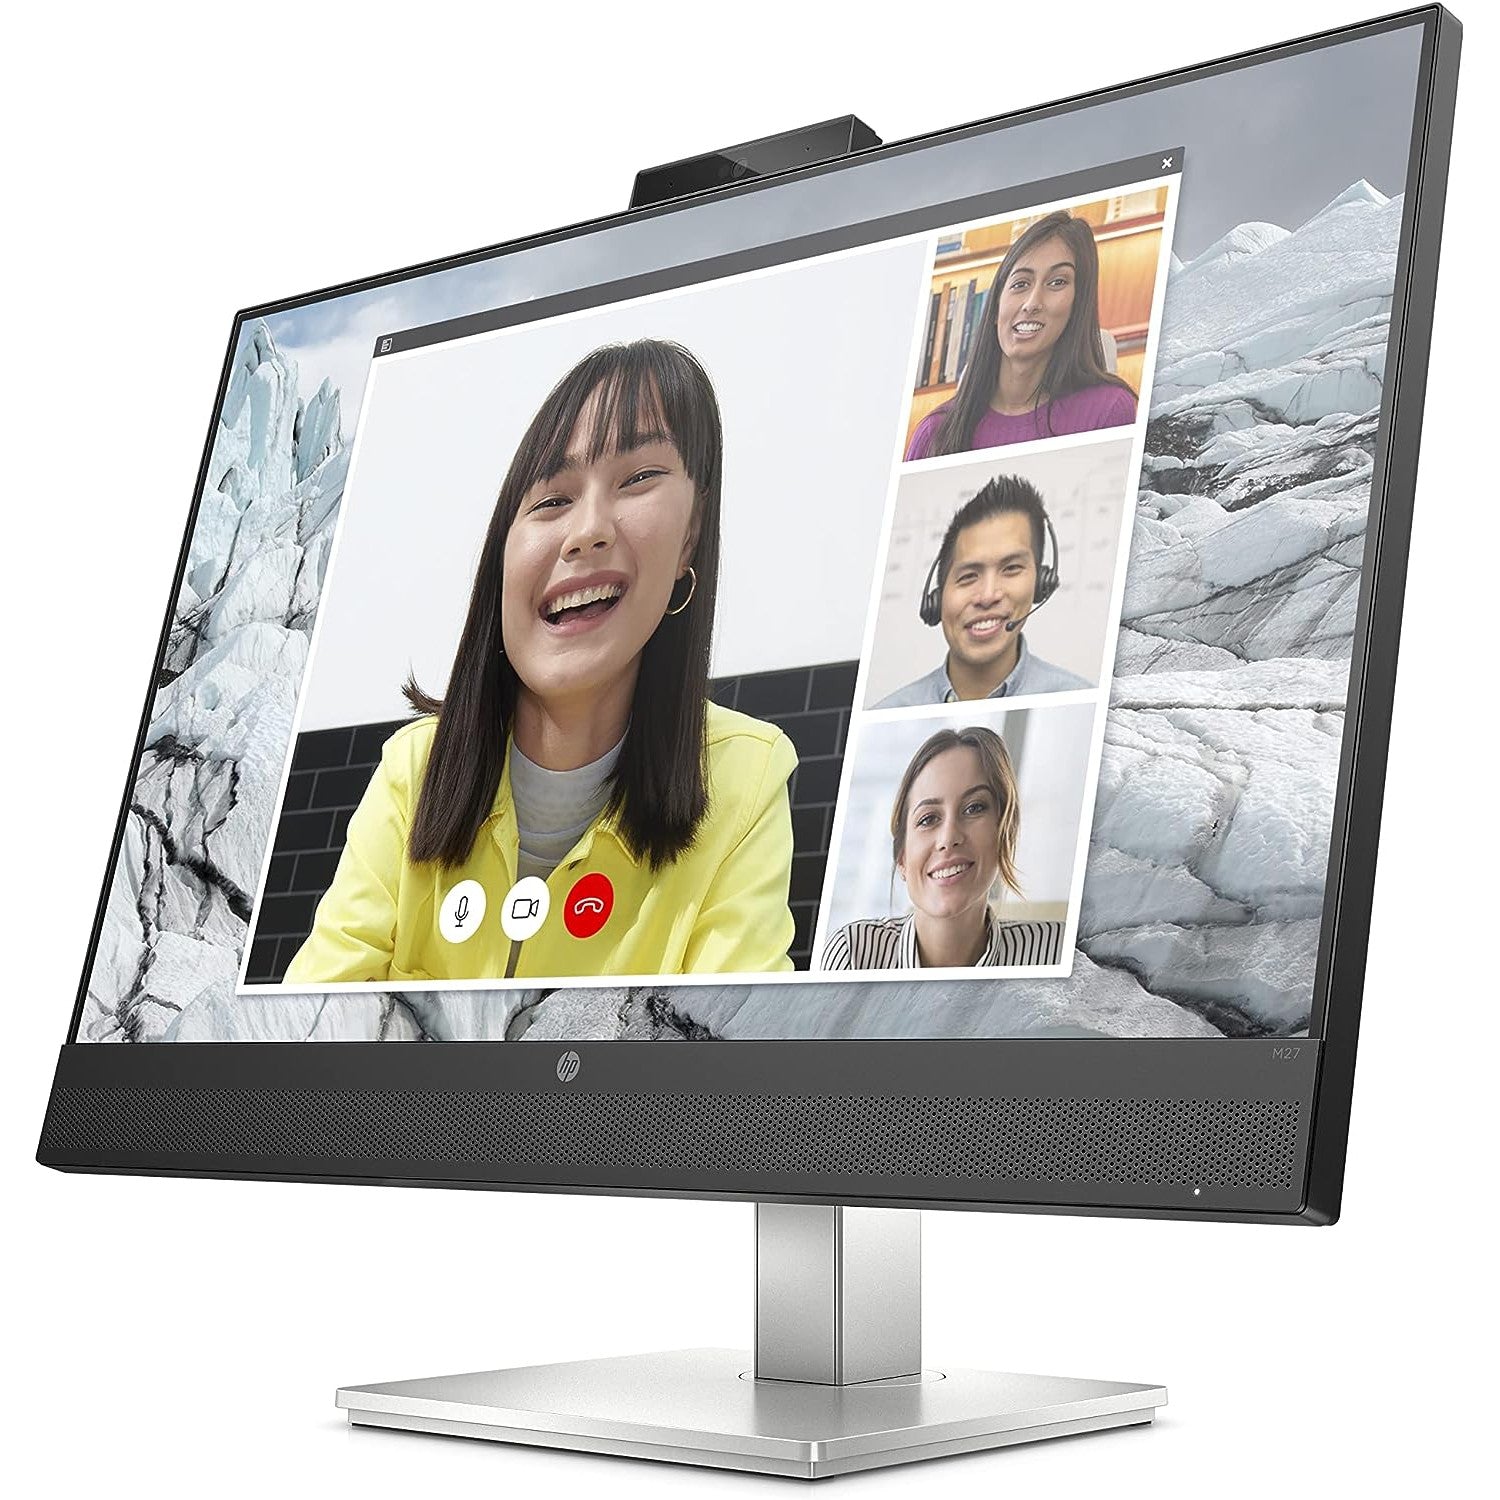 HP M27 27” FHD IPS USB-C Webcam Monitor